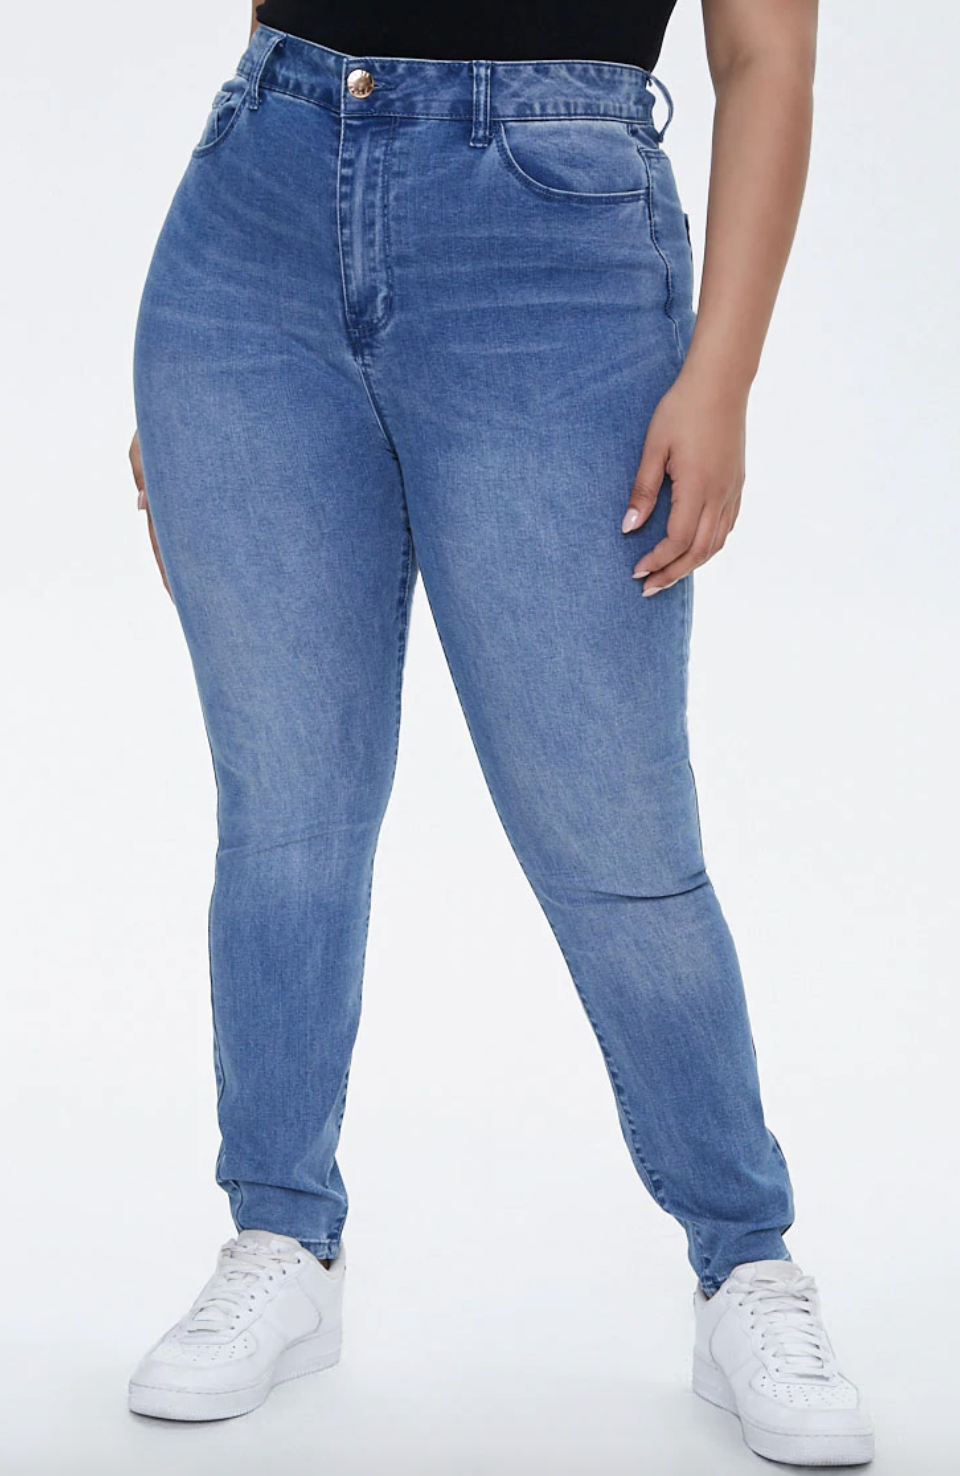 size 18 long jeans